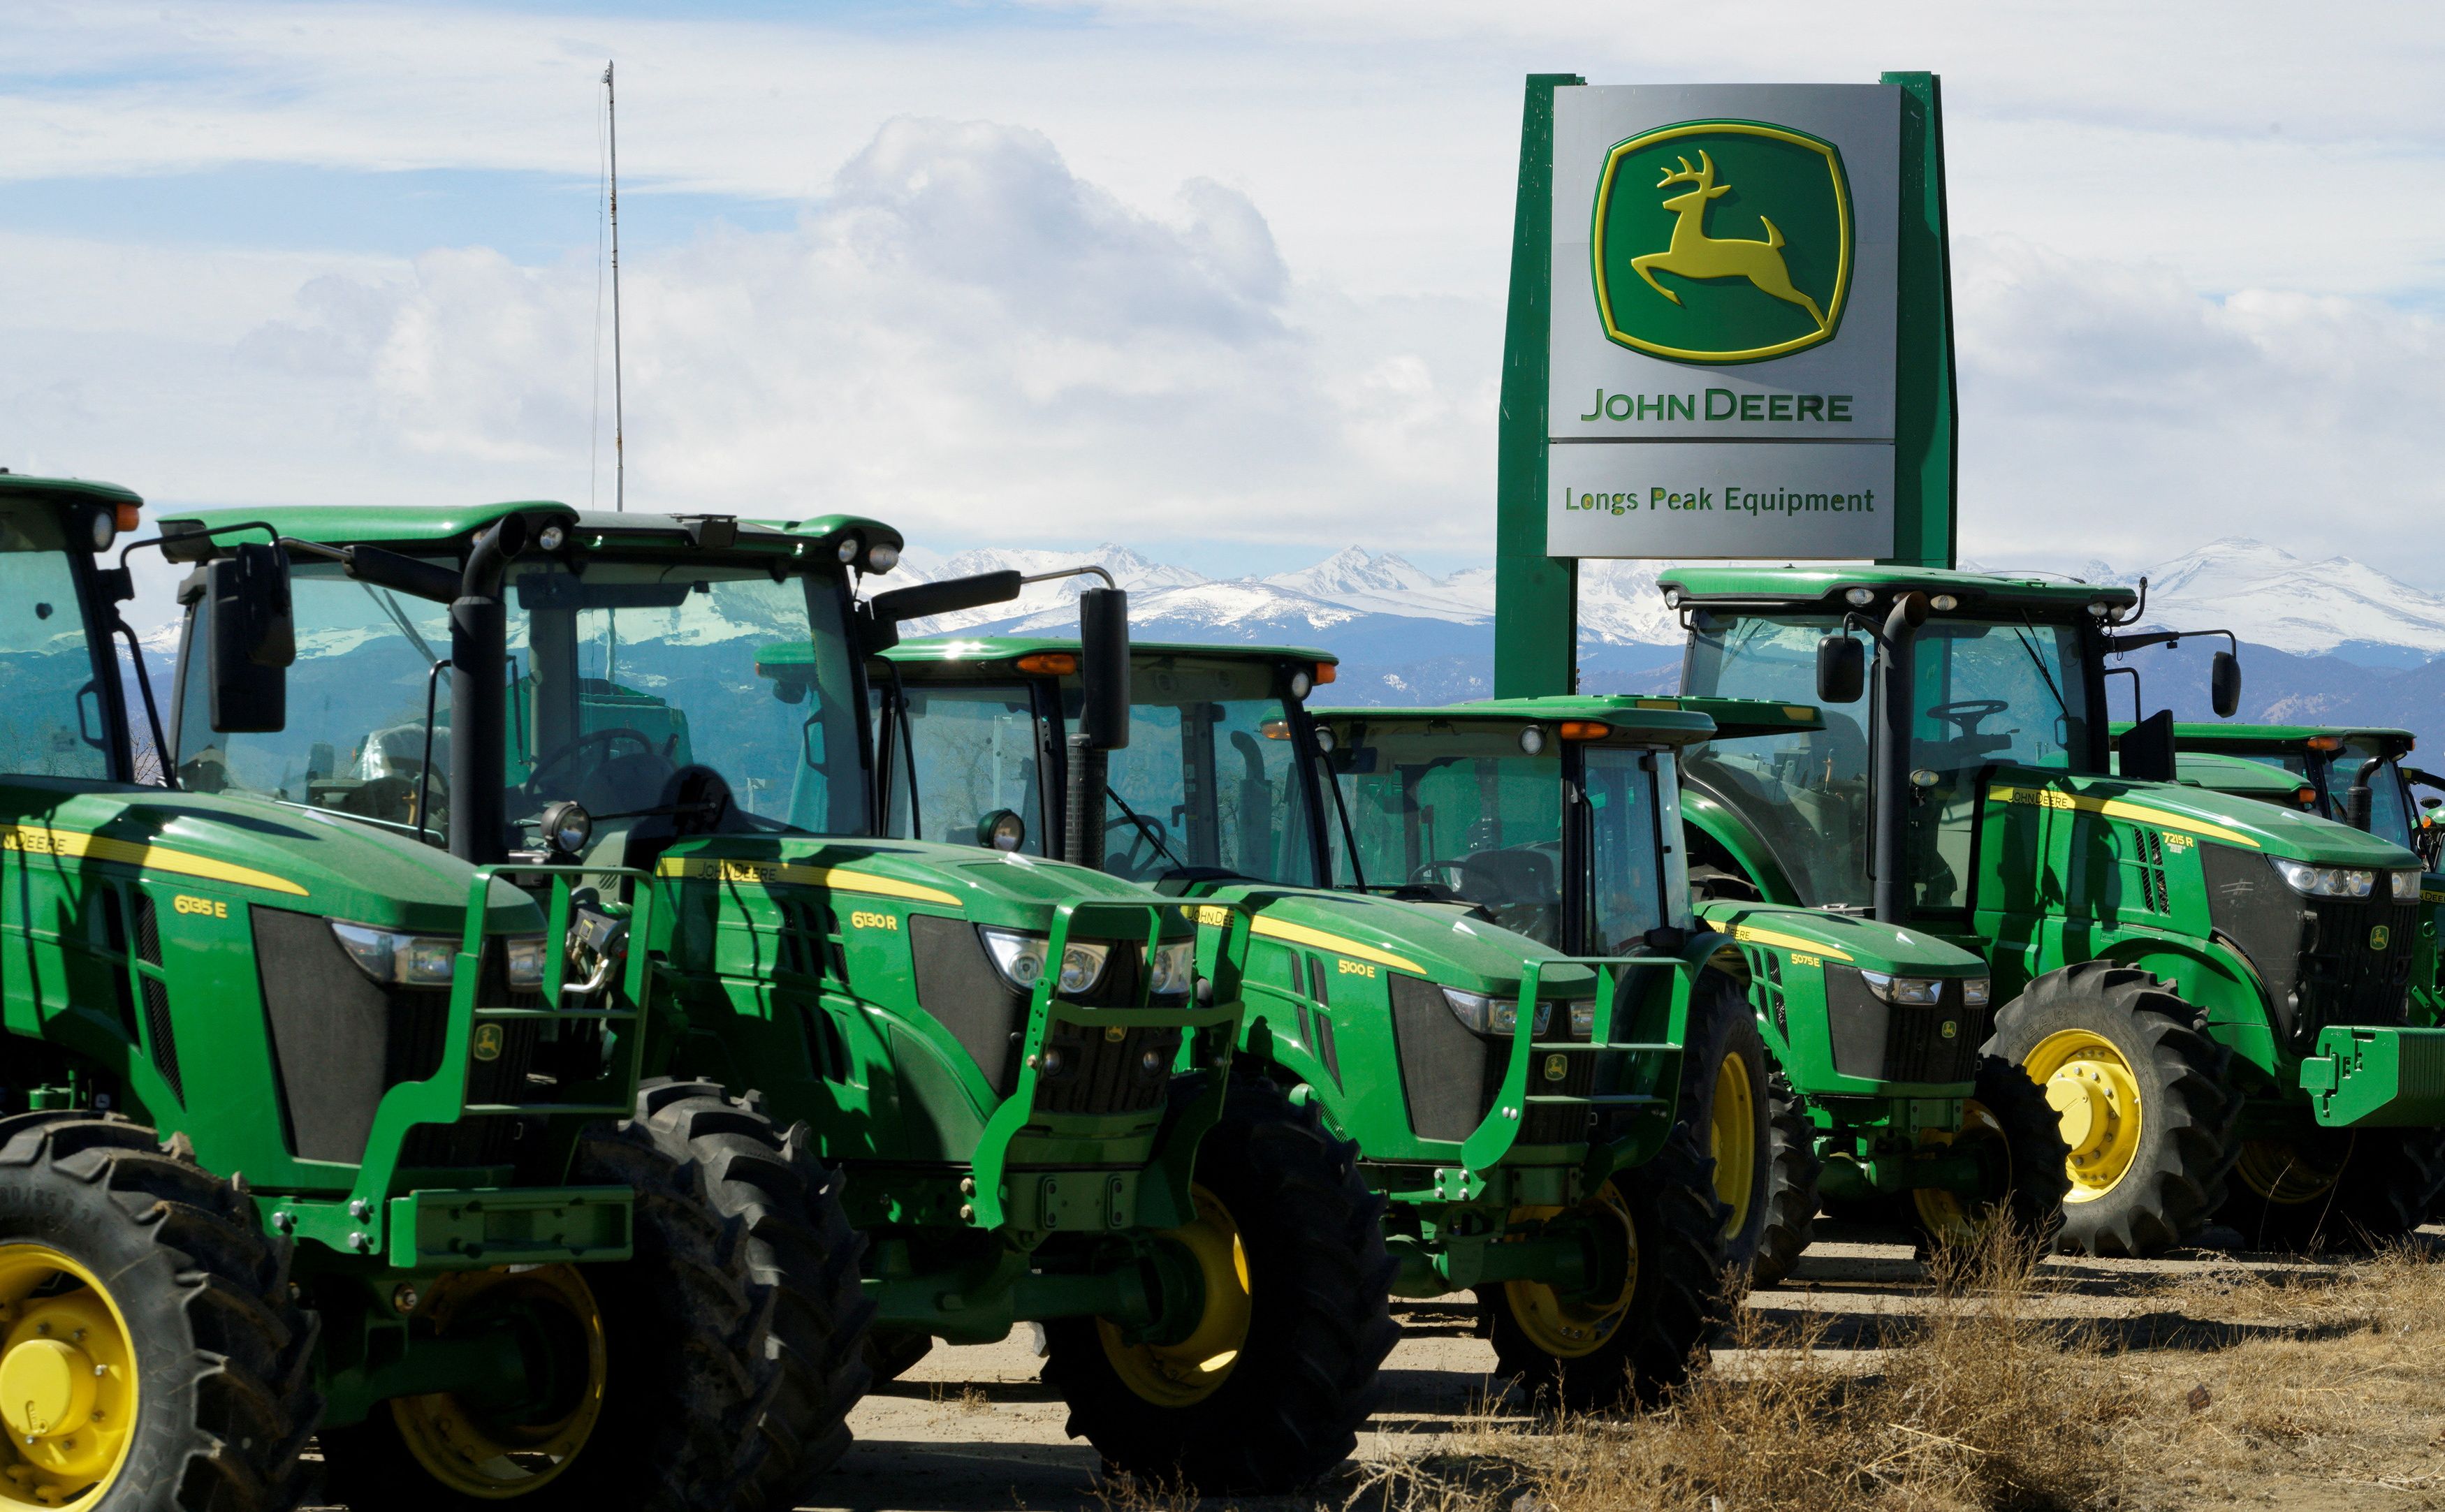 John Deere tractors are seen for sale at a dealer in Longmont